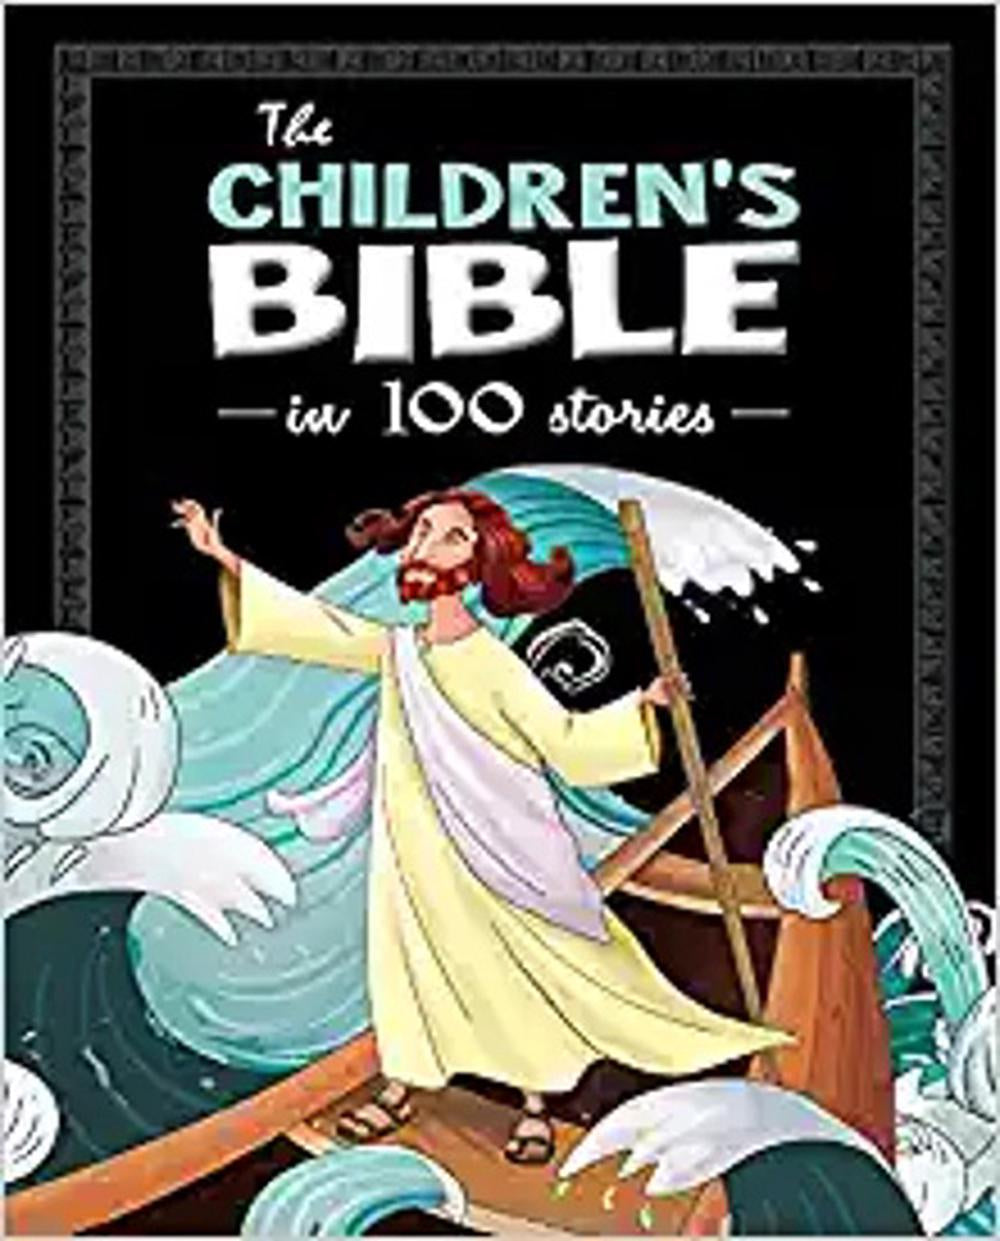 The Children's Bible in 100 Stories (Jesus in boat)